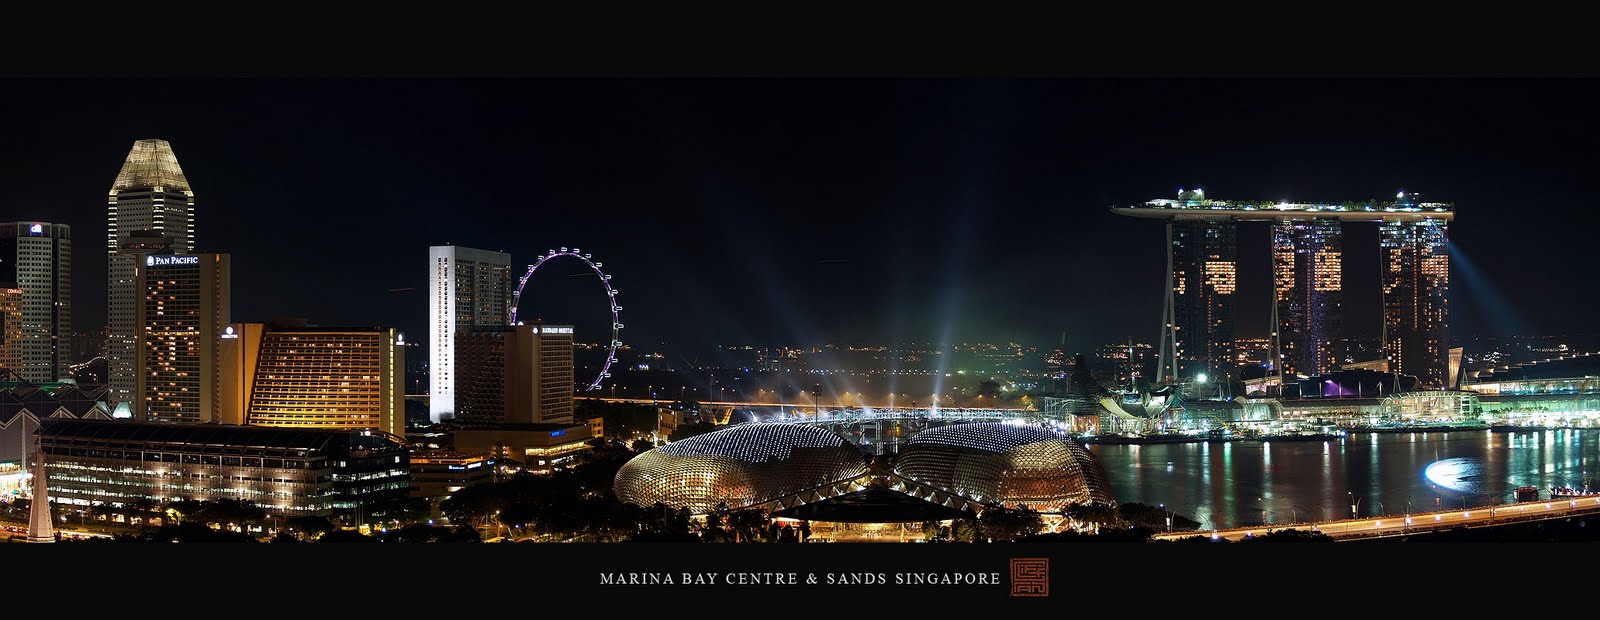 marina-bay-sands-singapore-night-picture-clifftan.jpg